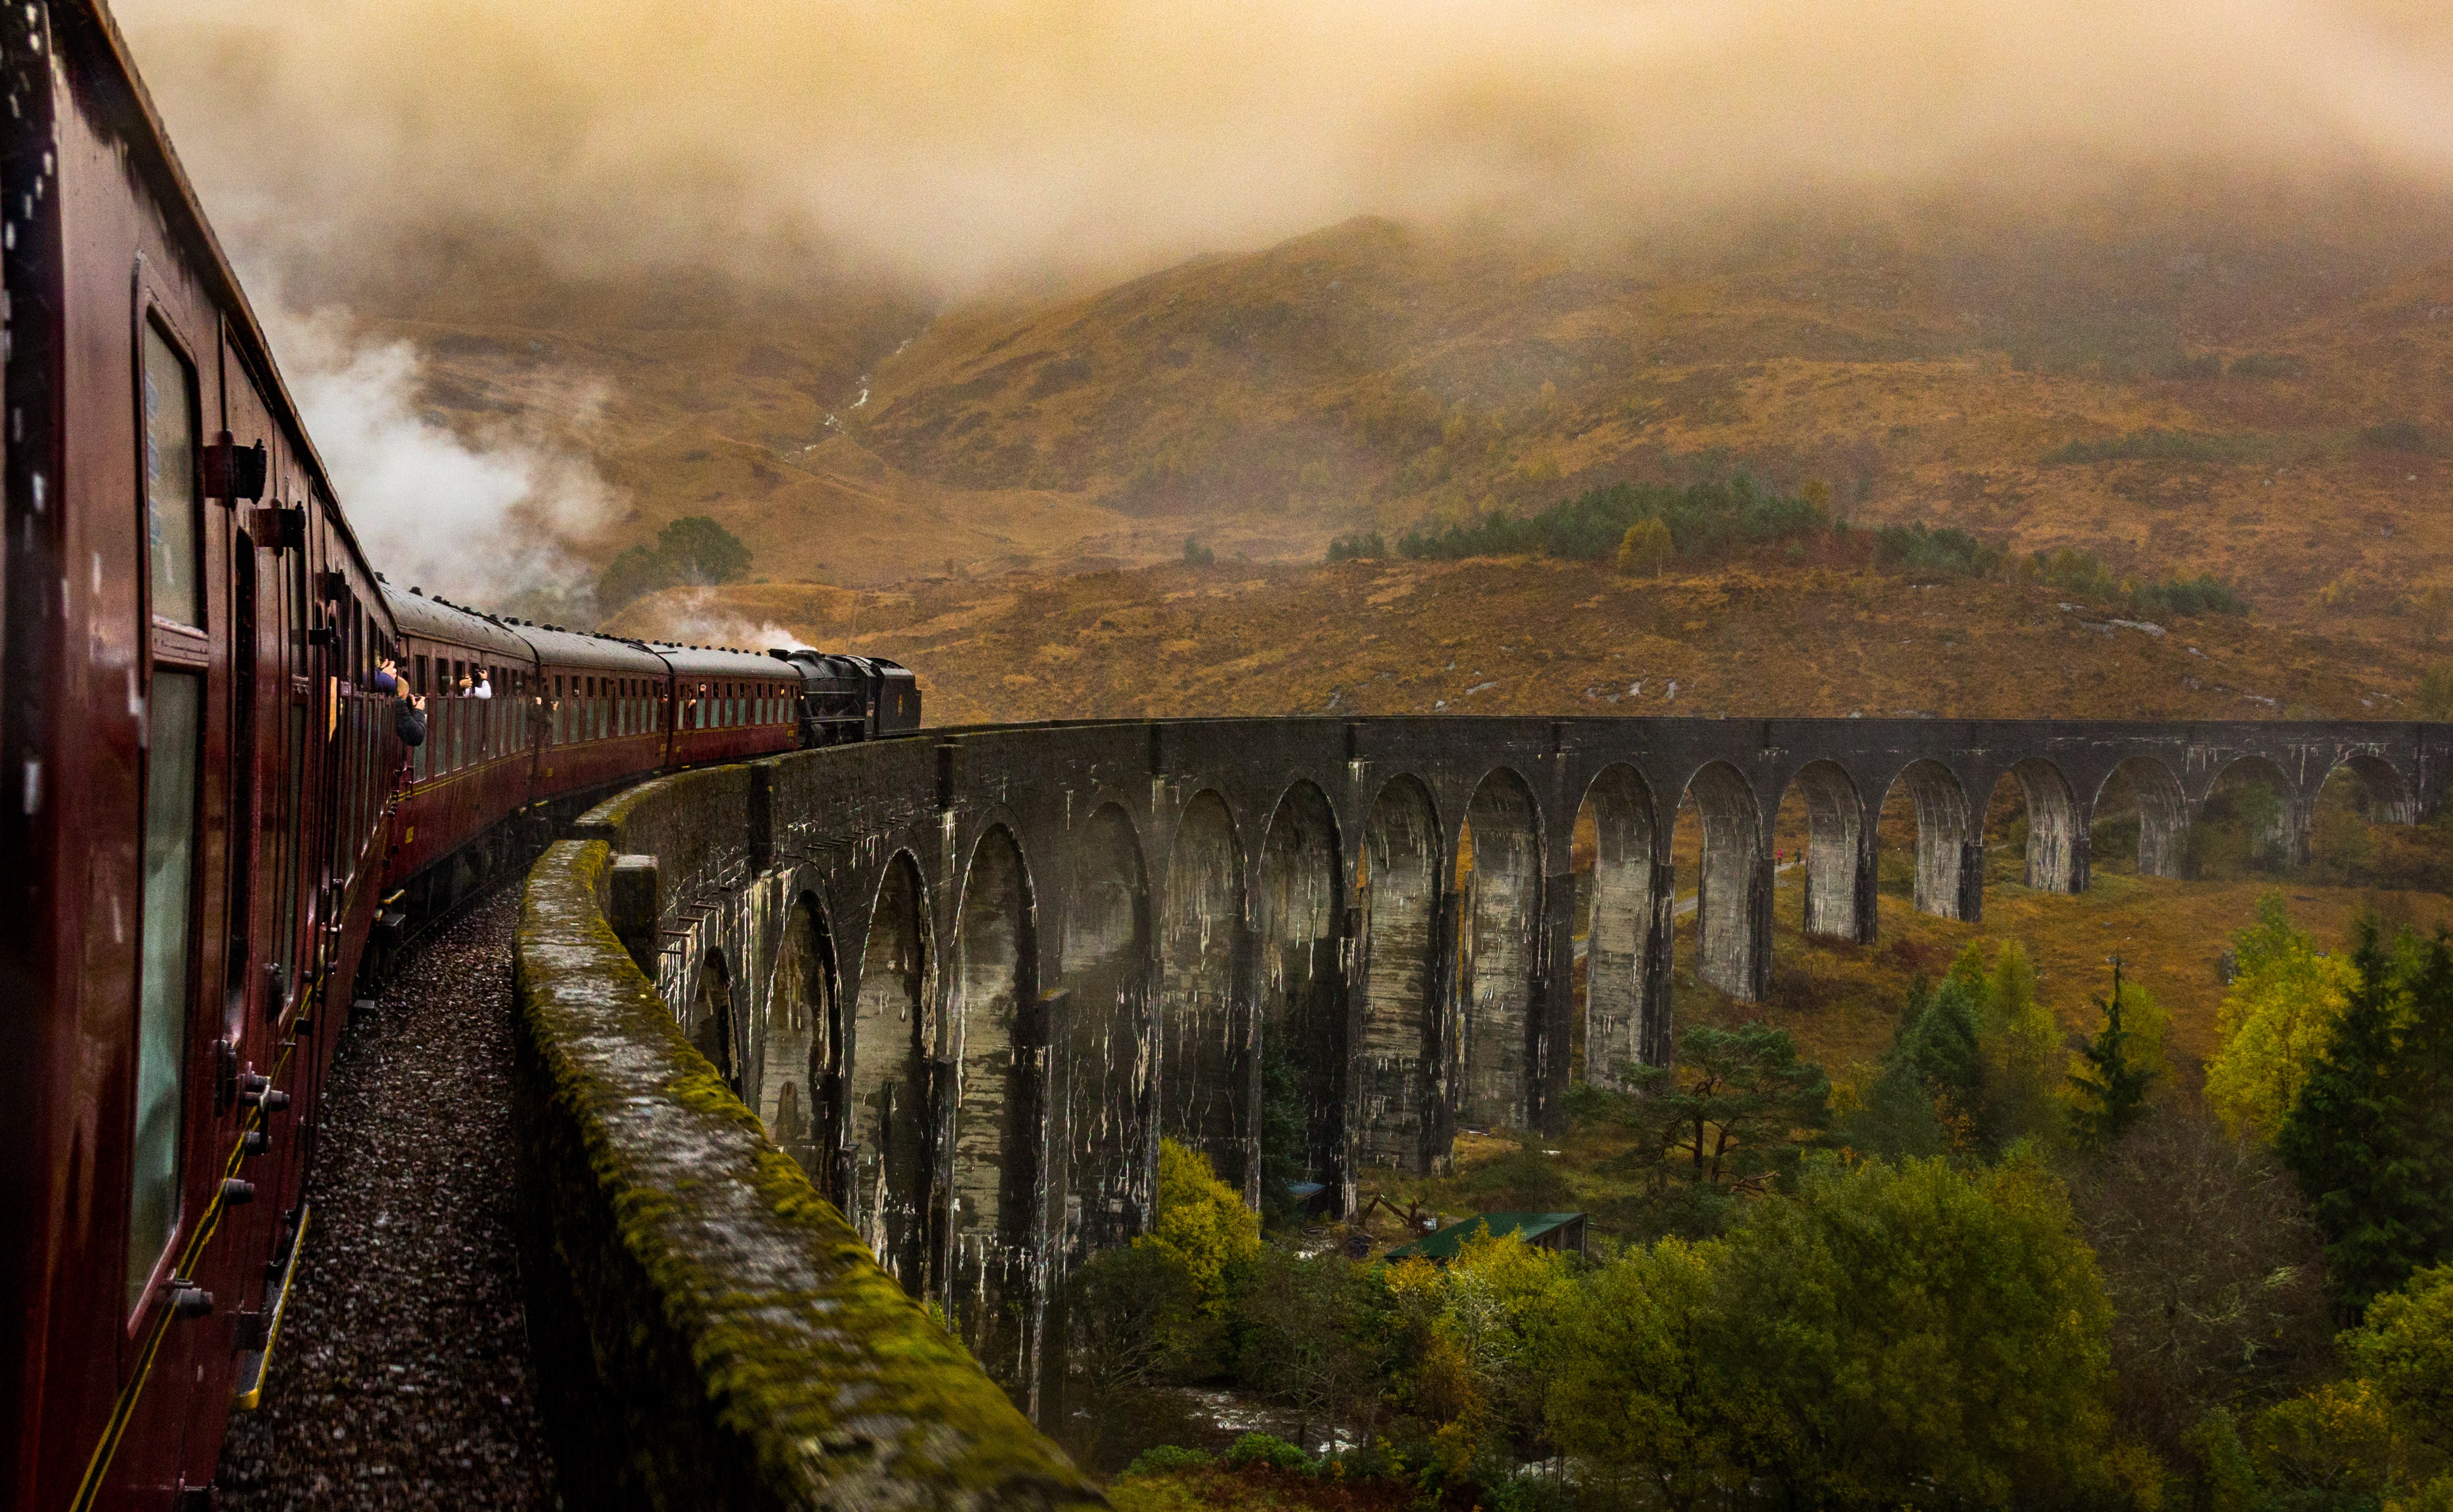 Scotland Harry Potter Road Trip